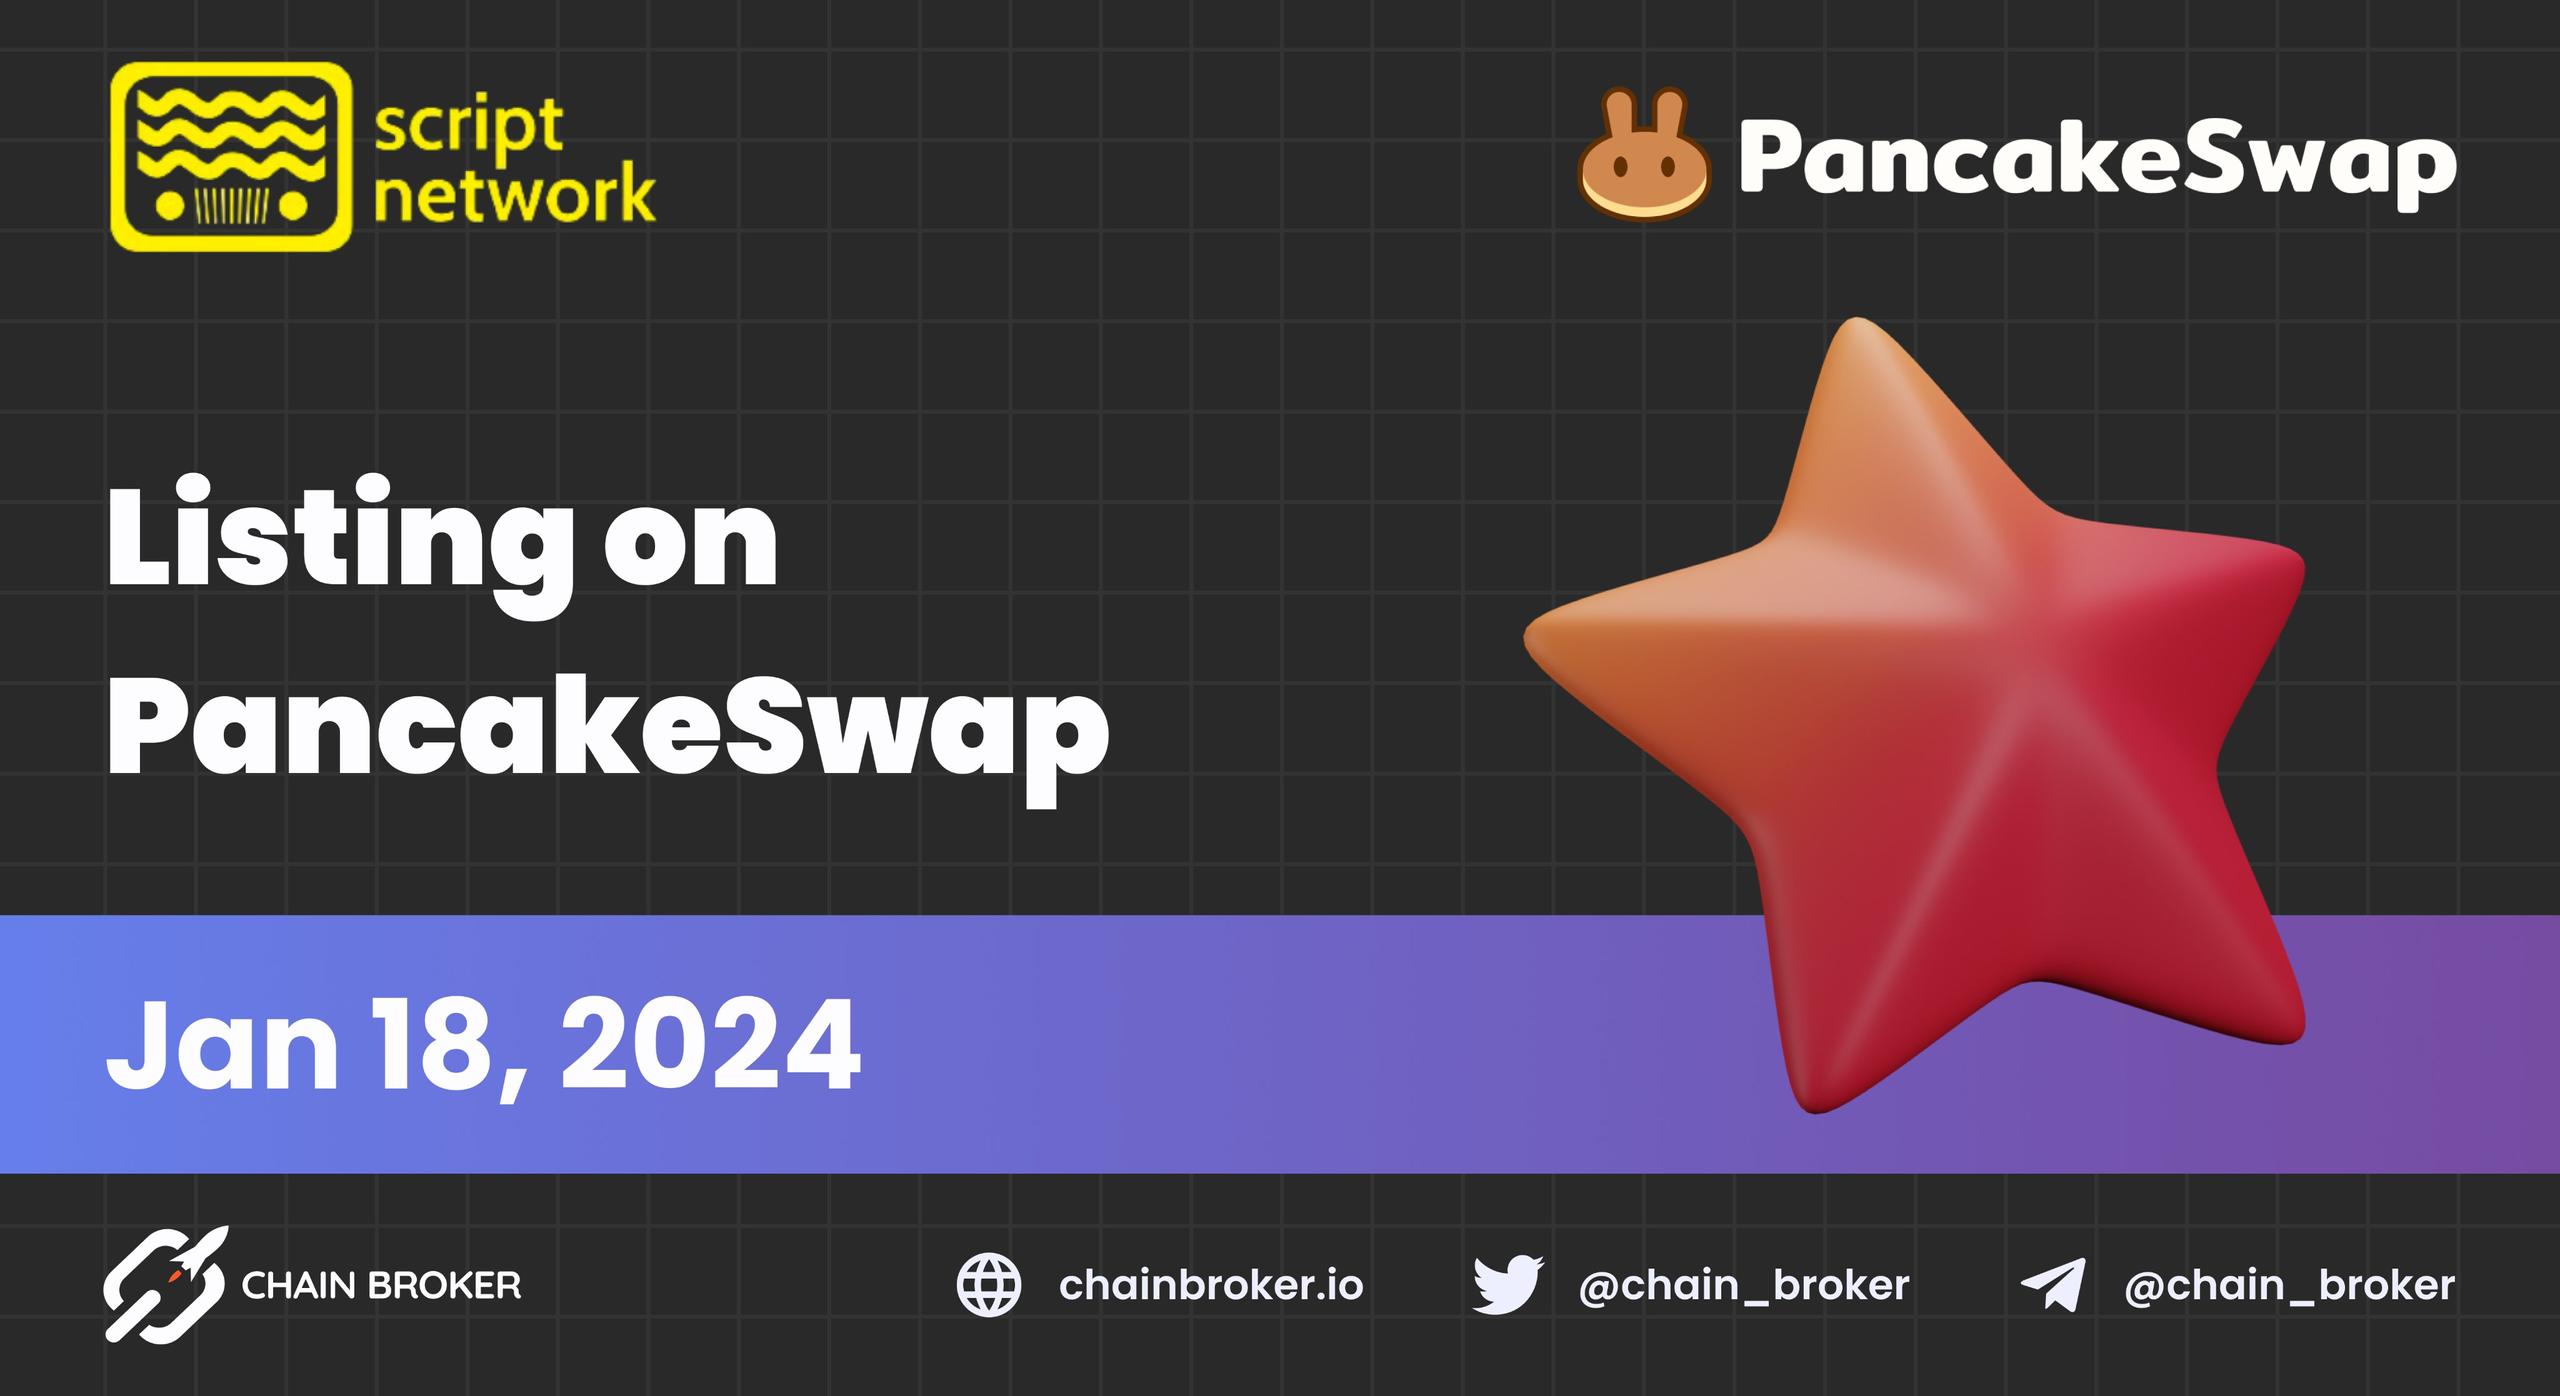 Script Network got listed on PancakeSwap